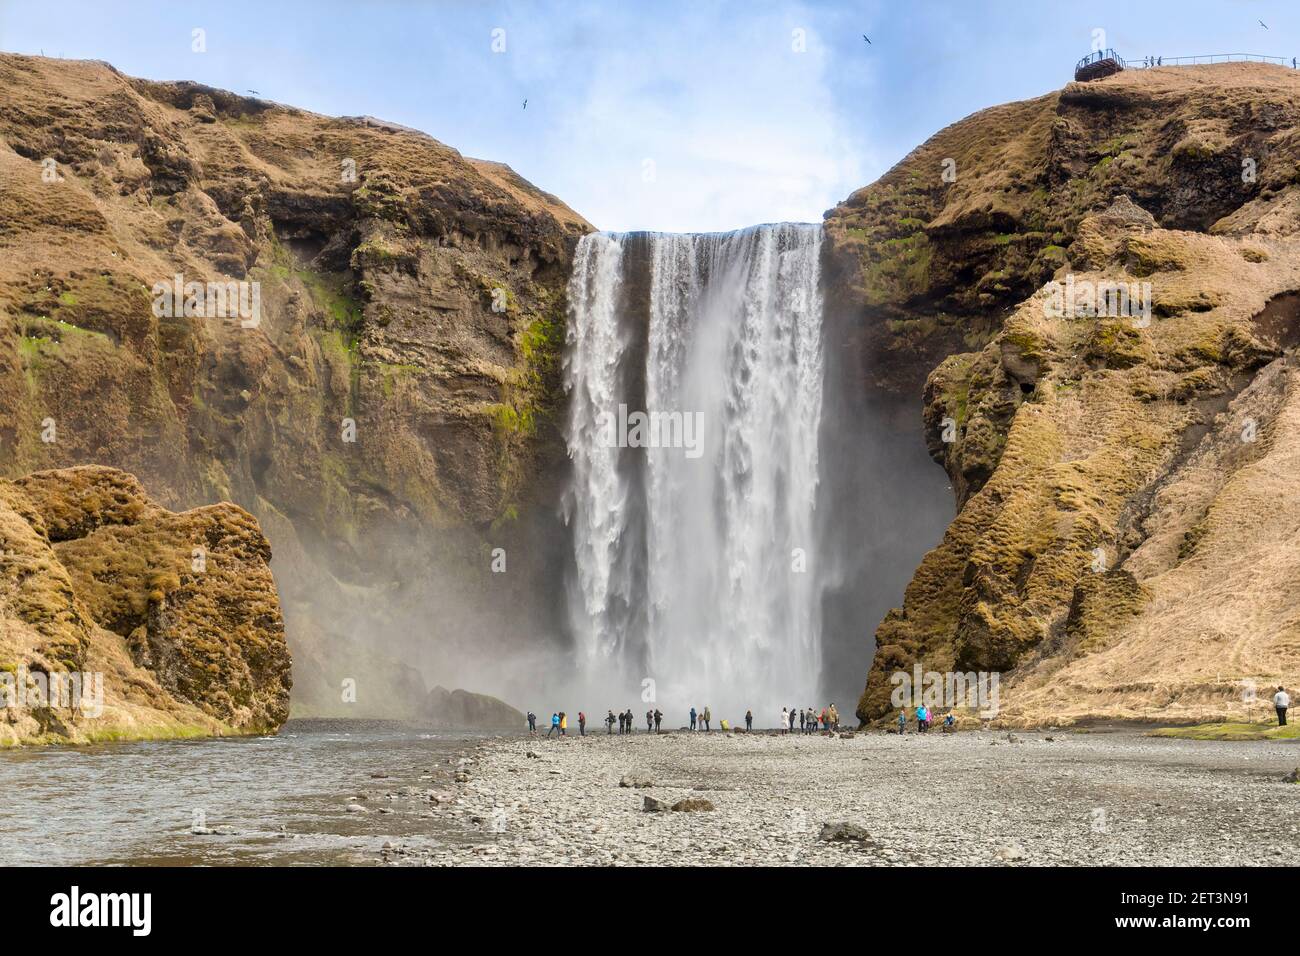 22 avril 2018 : Skogafoss, Islande du Sud. - visiteurs au pied de la cascade de Skogafoss, Islande du Sud. Banque D'Images